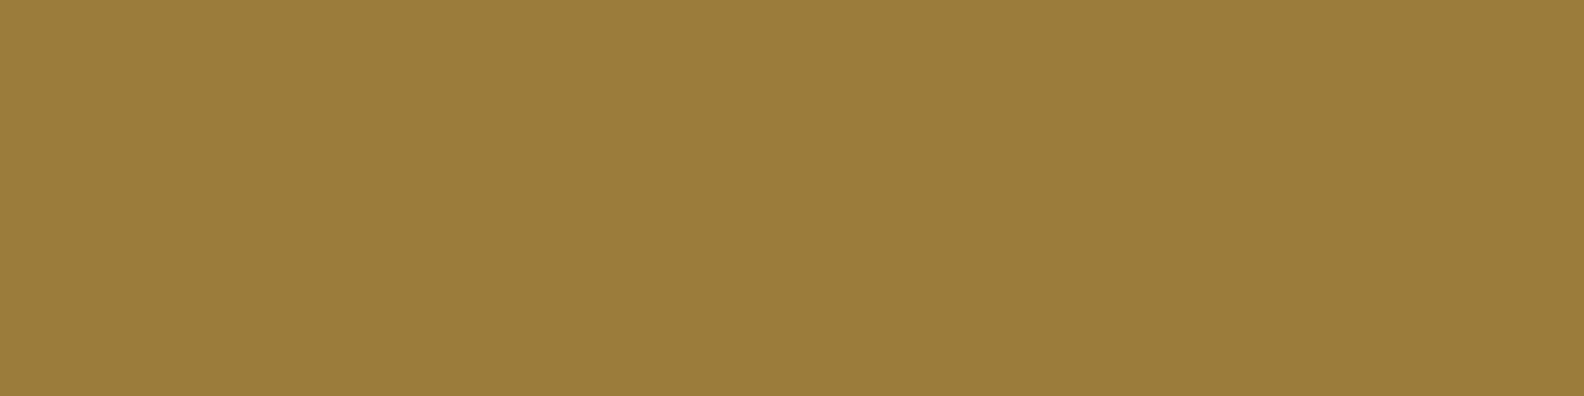 1584x396 Metallic Sunburst Solid Color Background